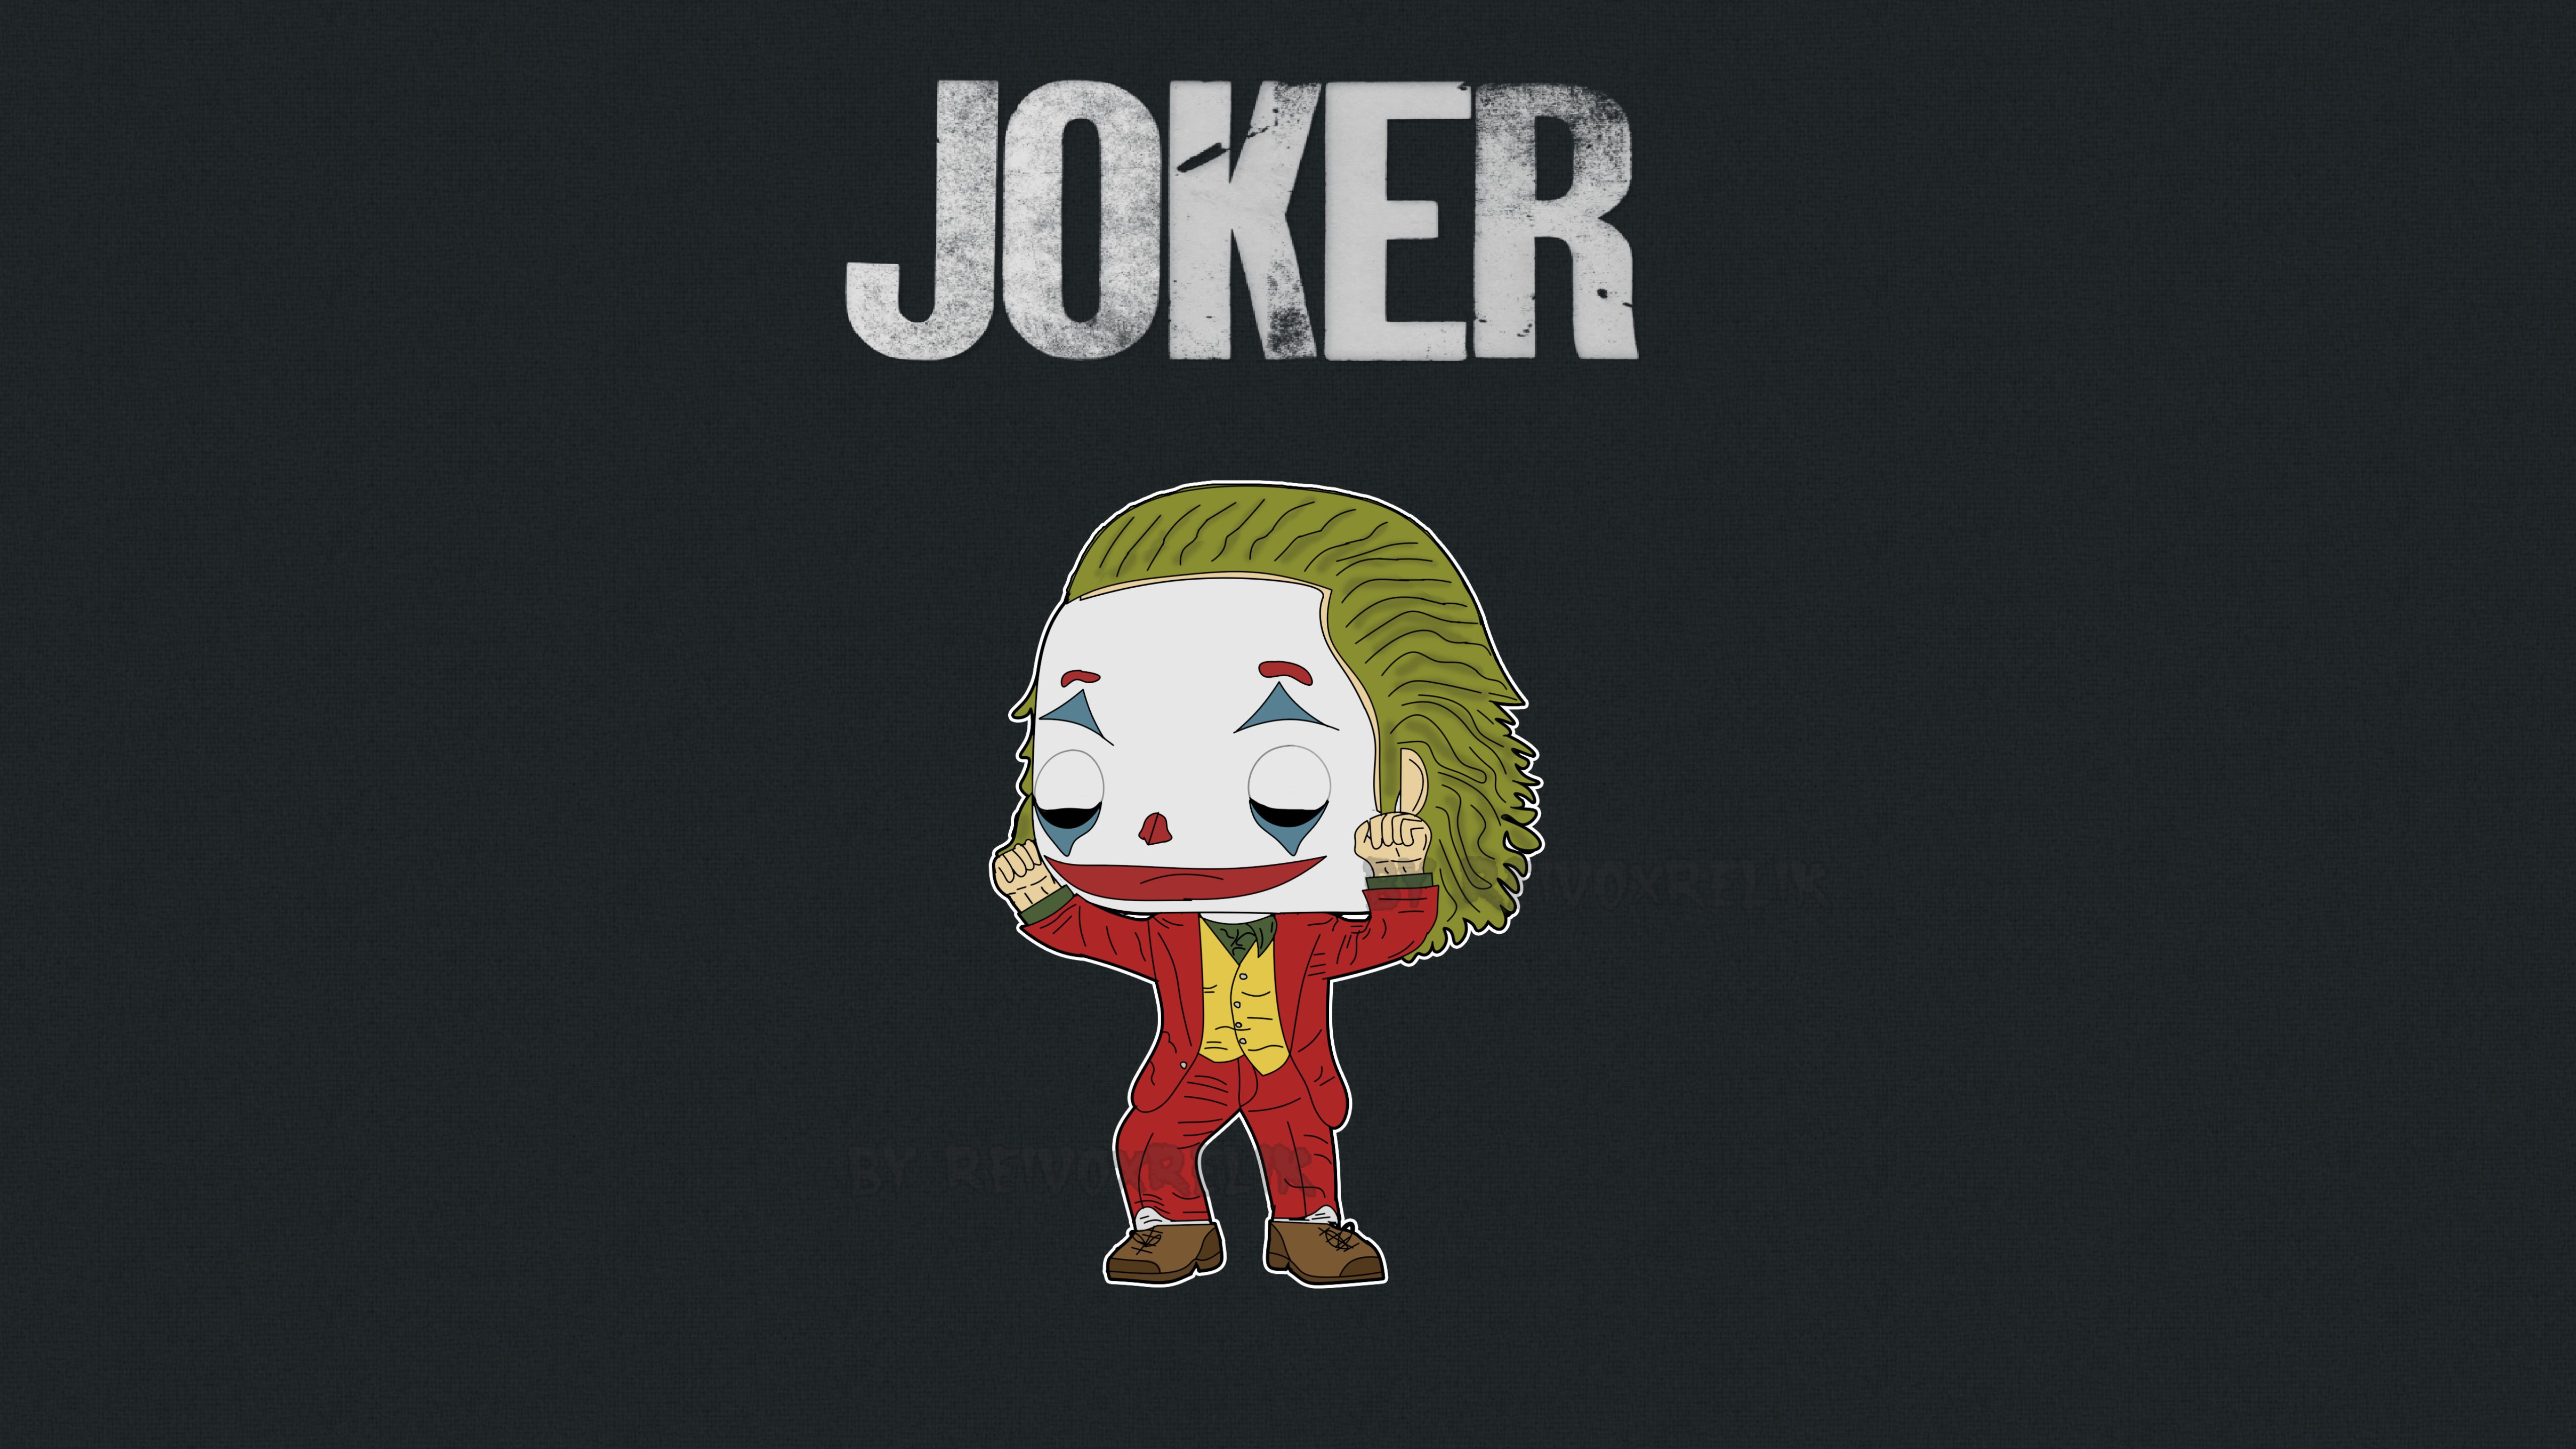 Little Joker Minimalist 2019 Funko Pop